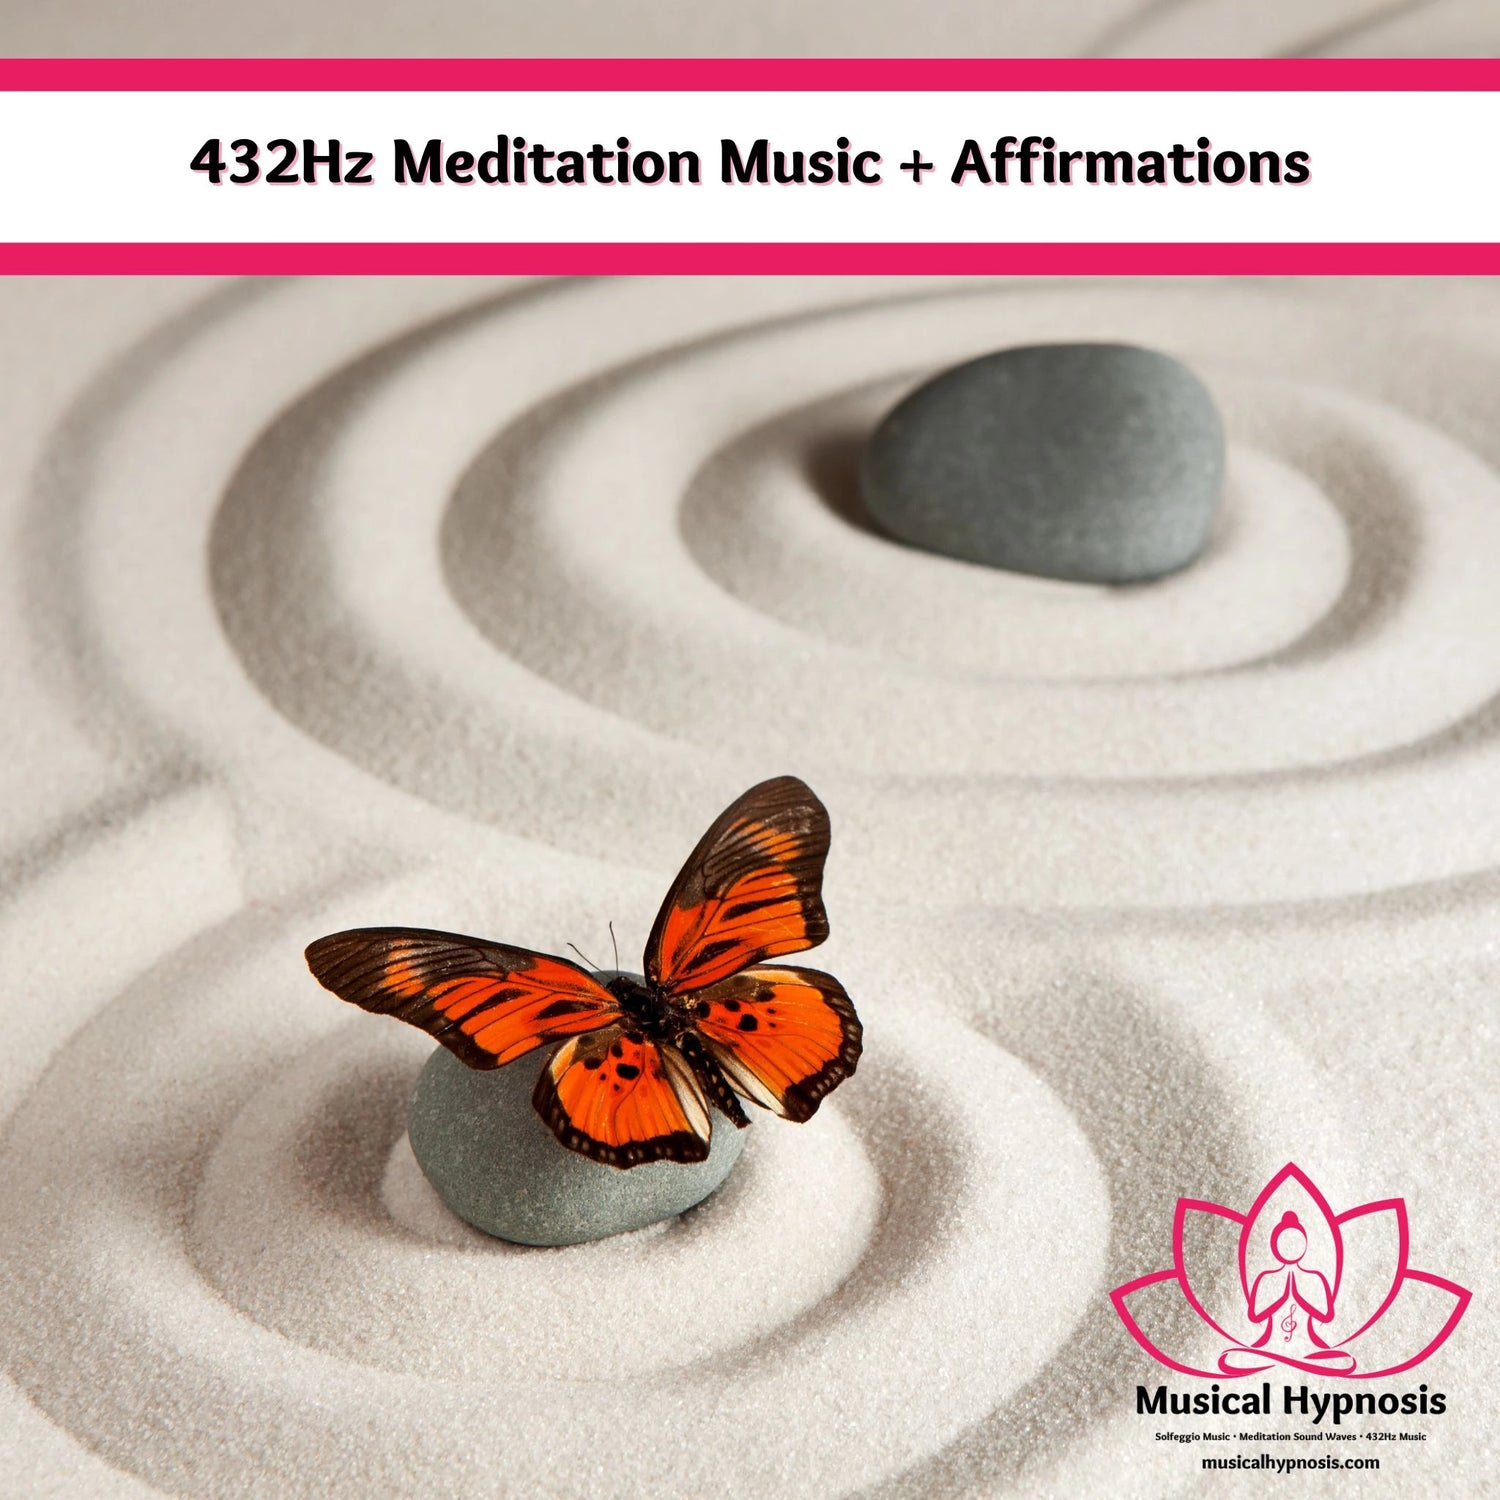 432Hz Meditation Music + Affirmations